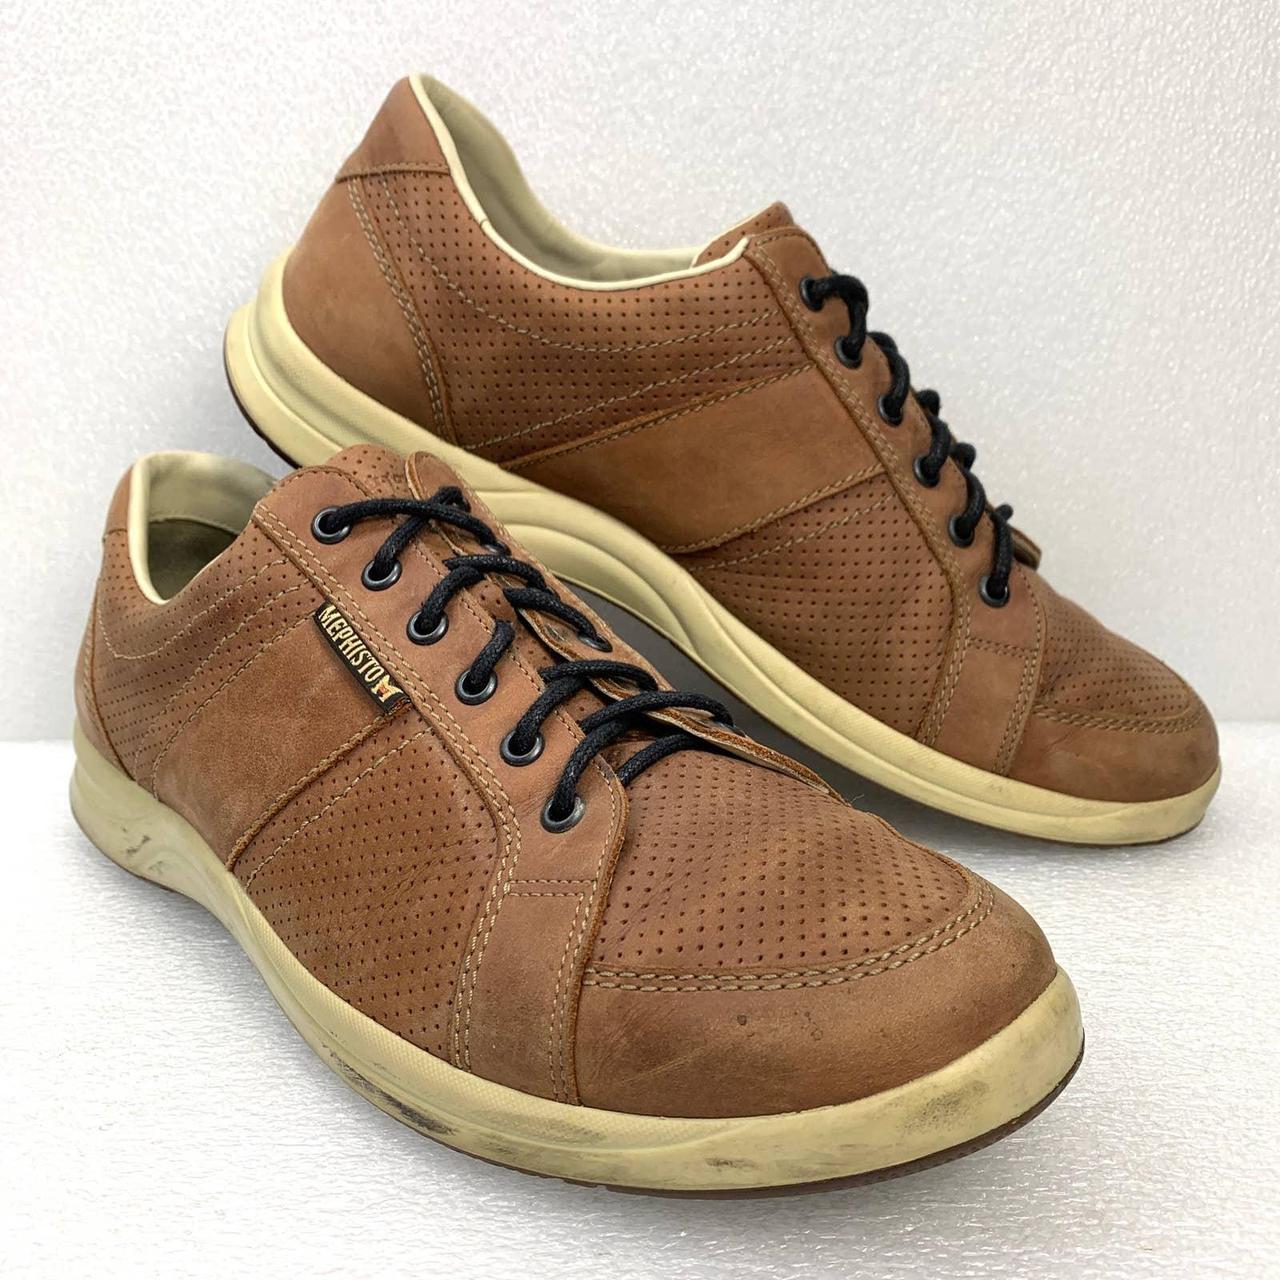 Mephisto Genuine Leather Sneaker in Brown / Tan Size... - Depop